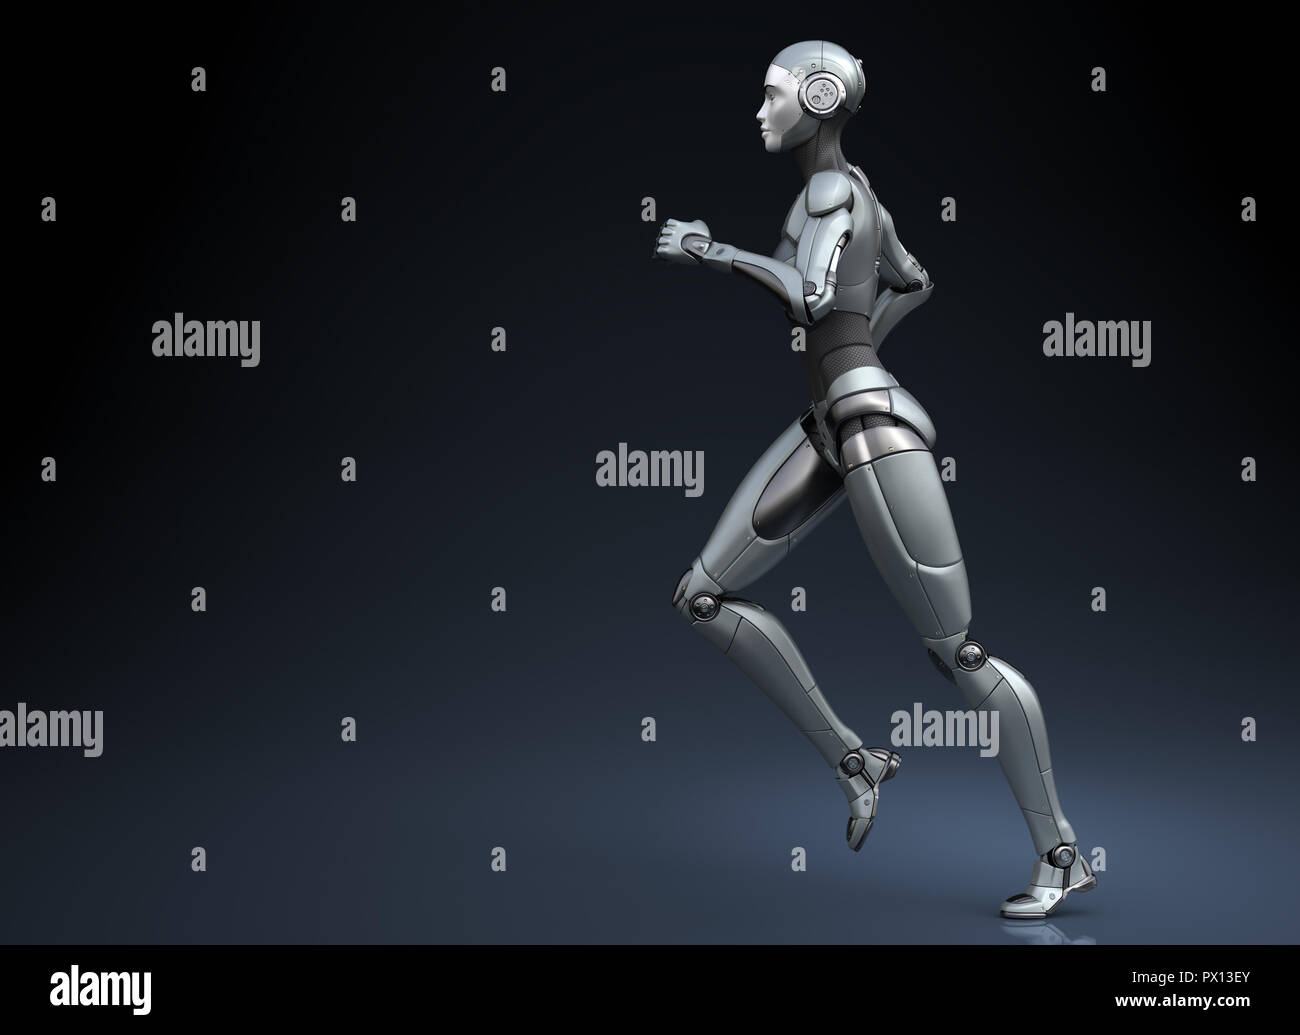 Running robot on dark background. 3D illustration Stock Photo